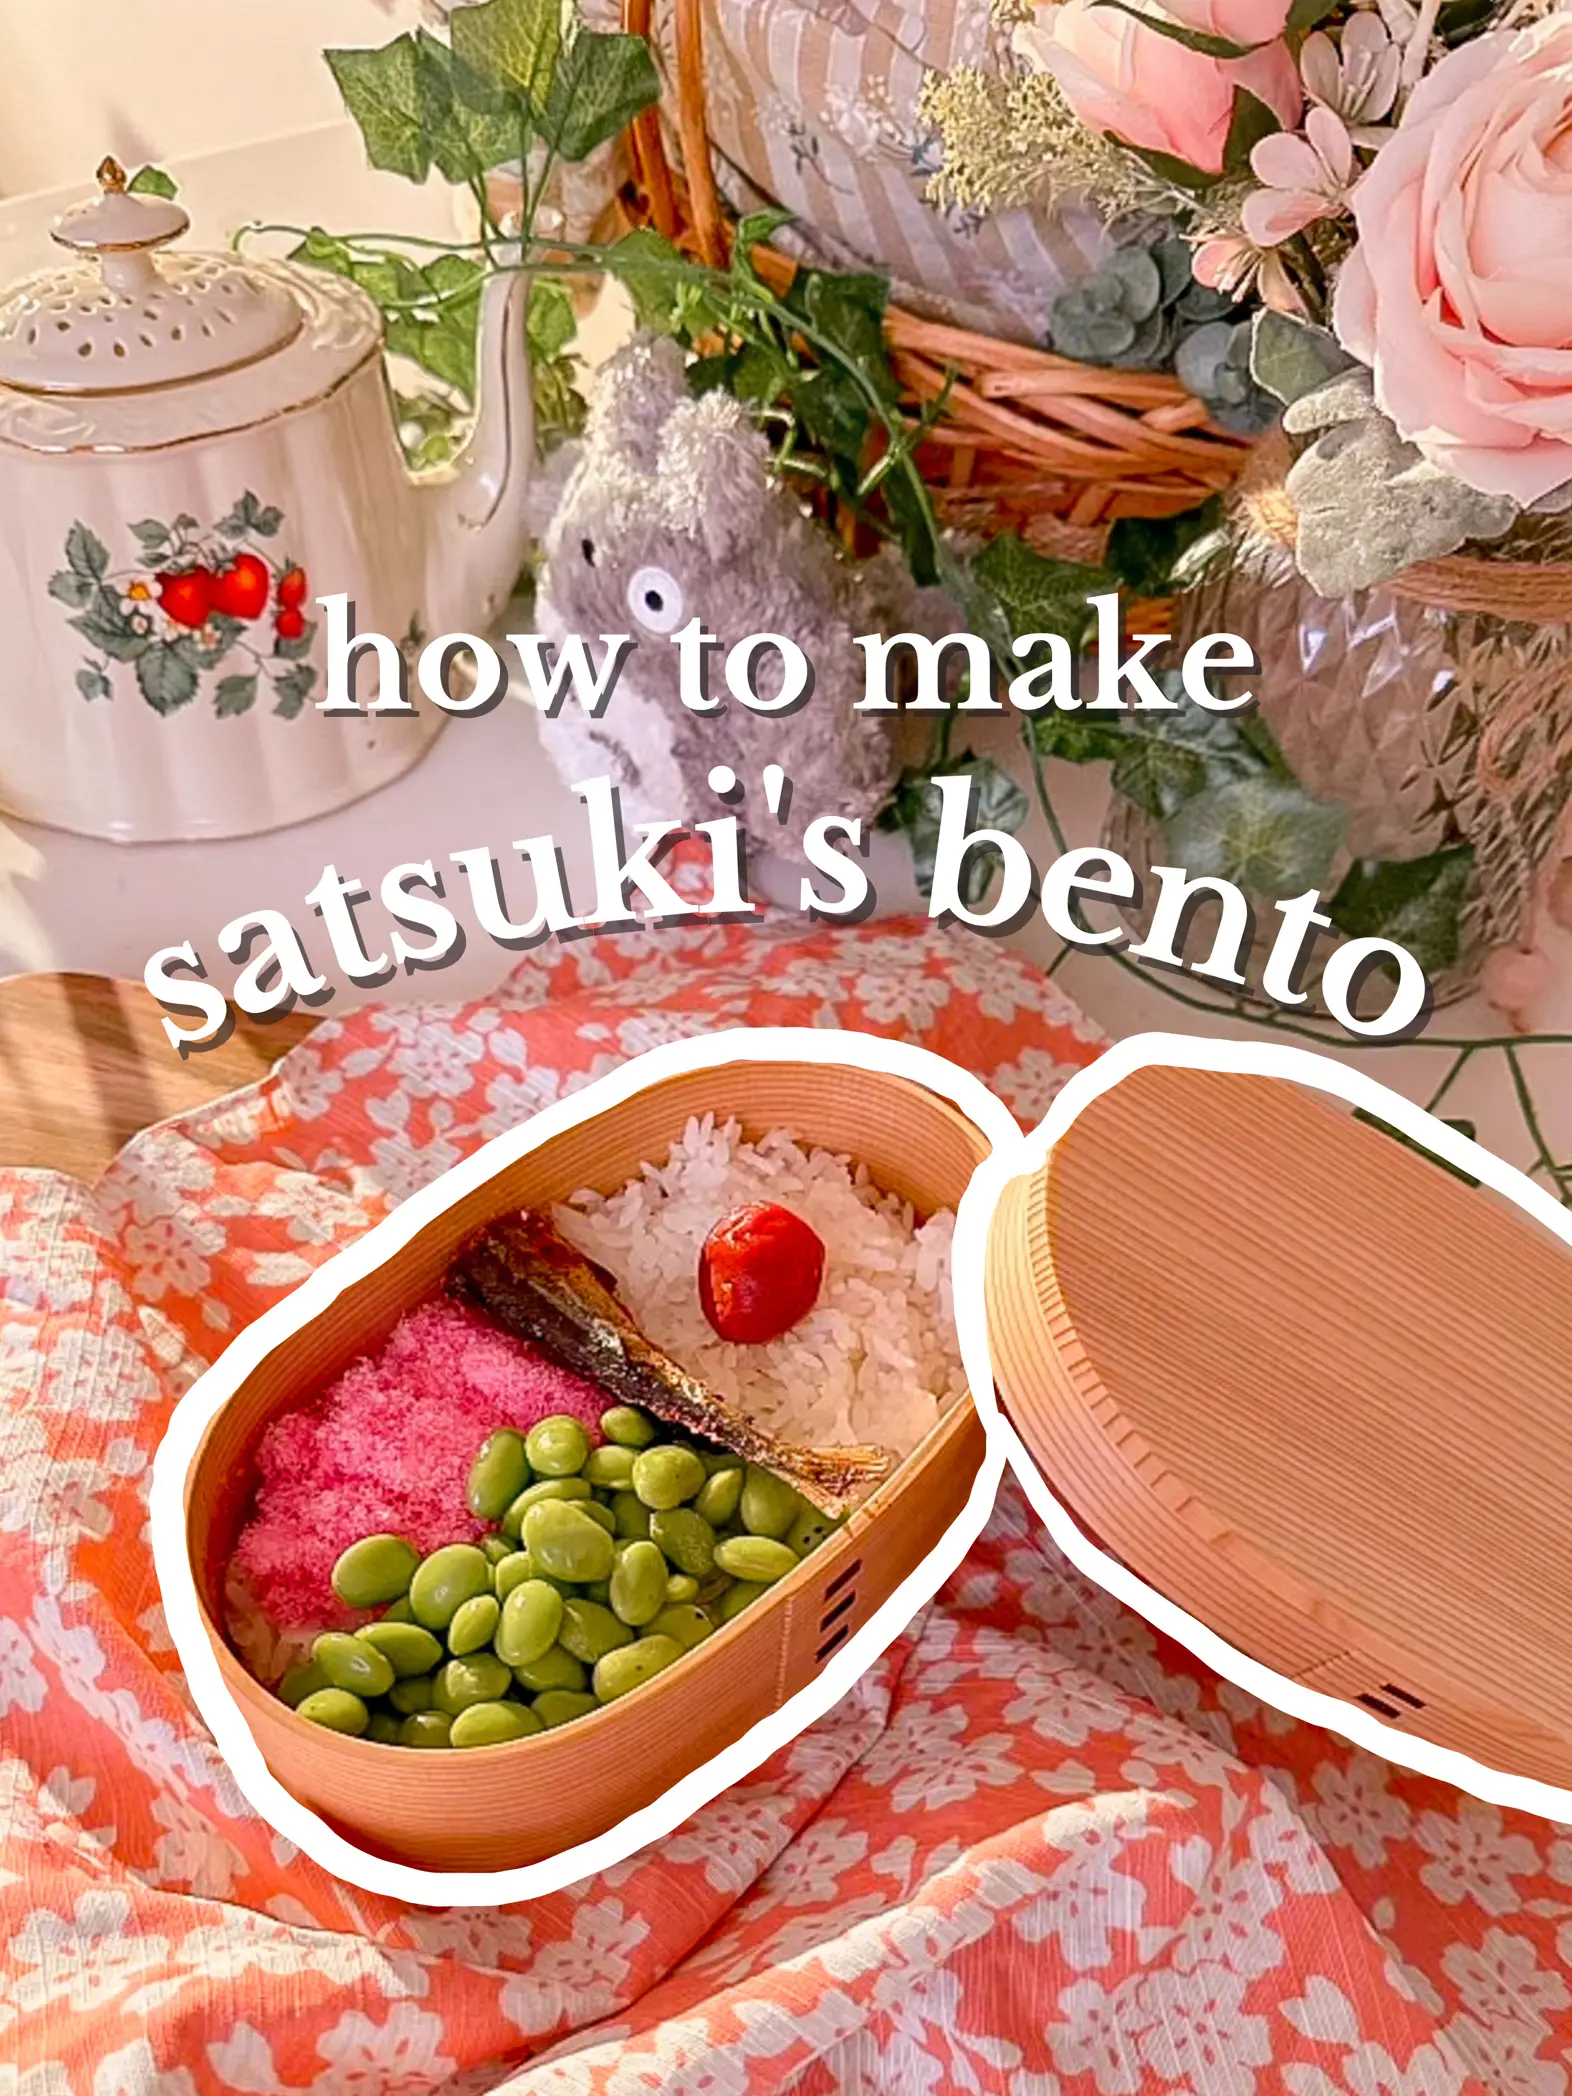 Anime Bento Box Aesthetic - Bento - Sticker